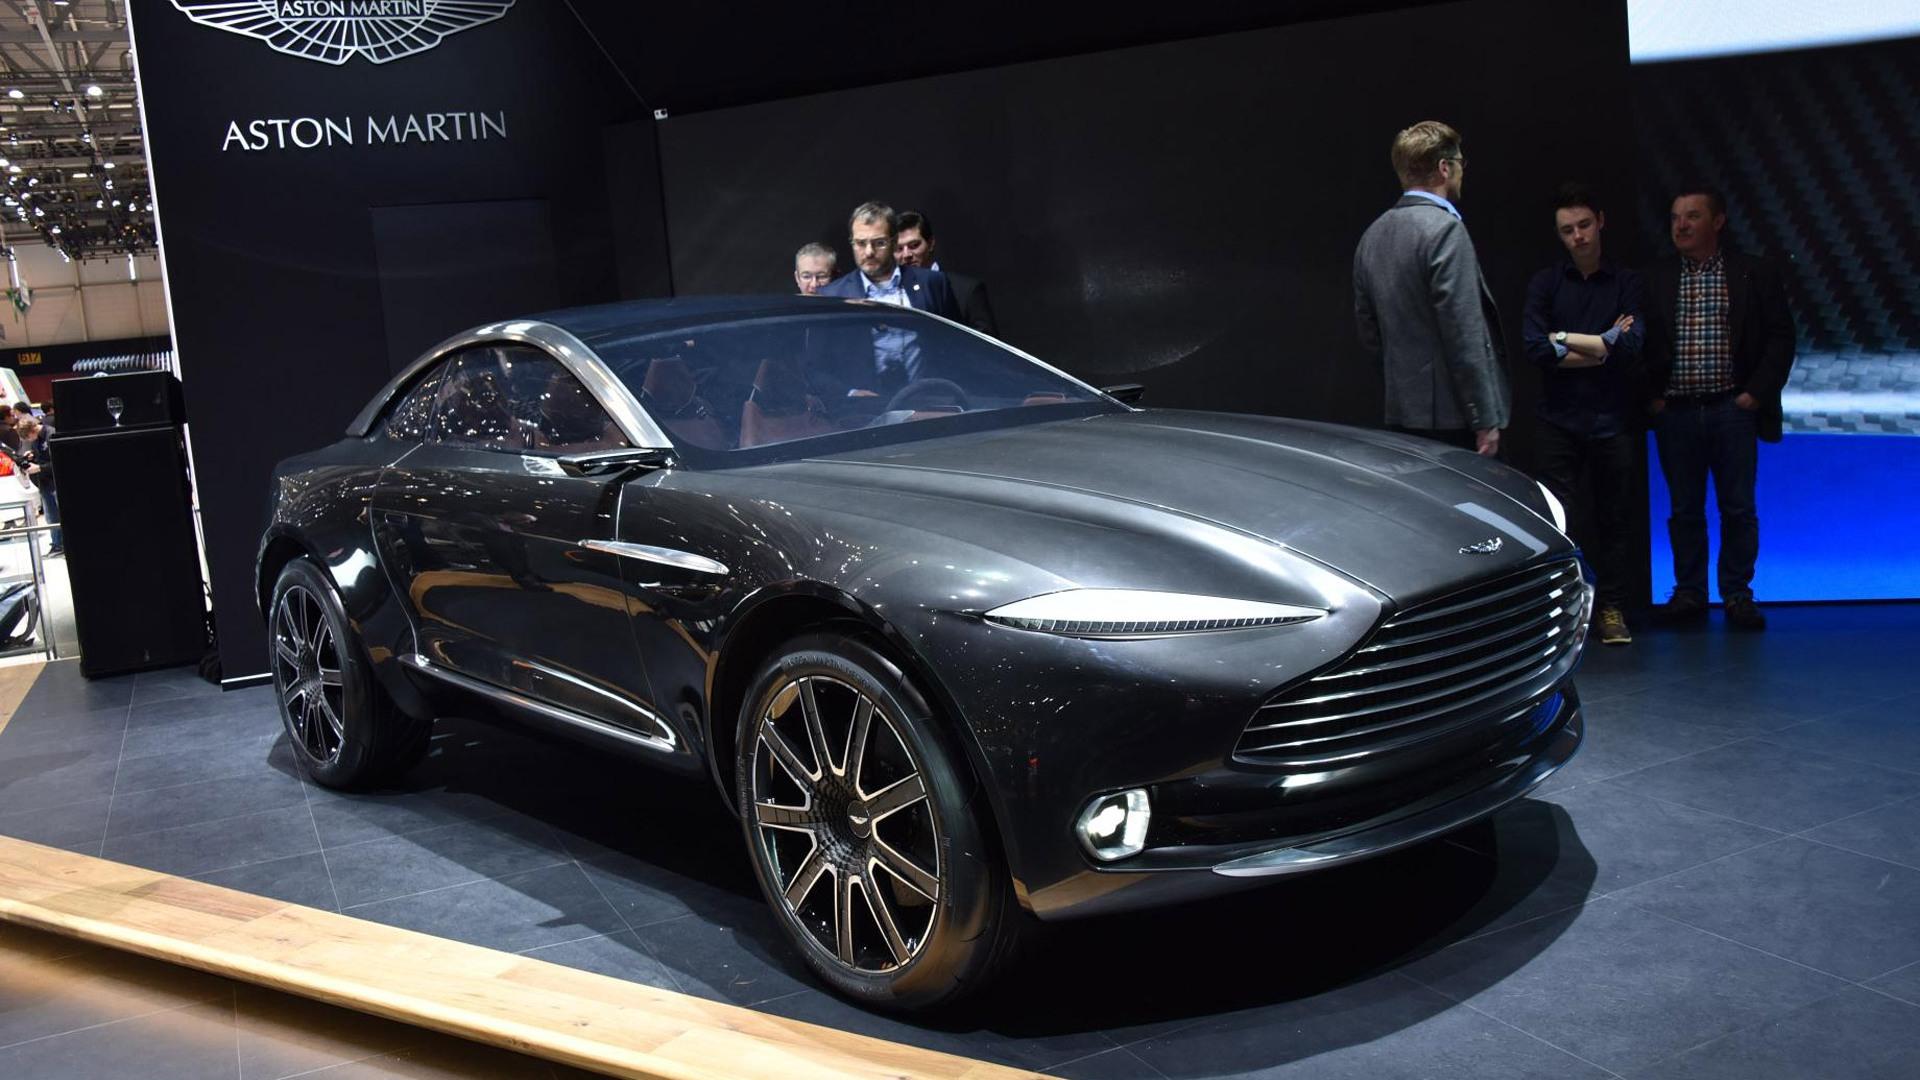 Aston Martin DBX concept is an all